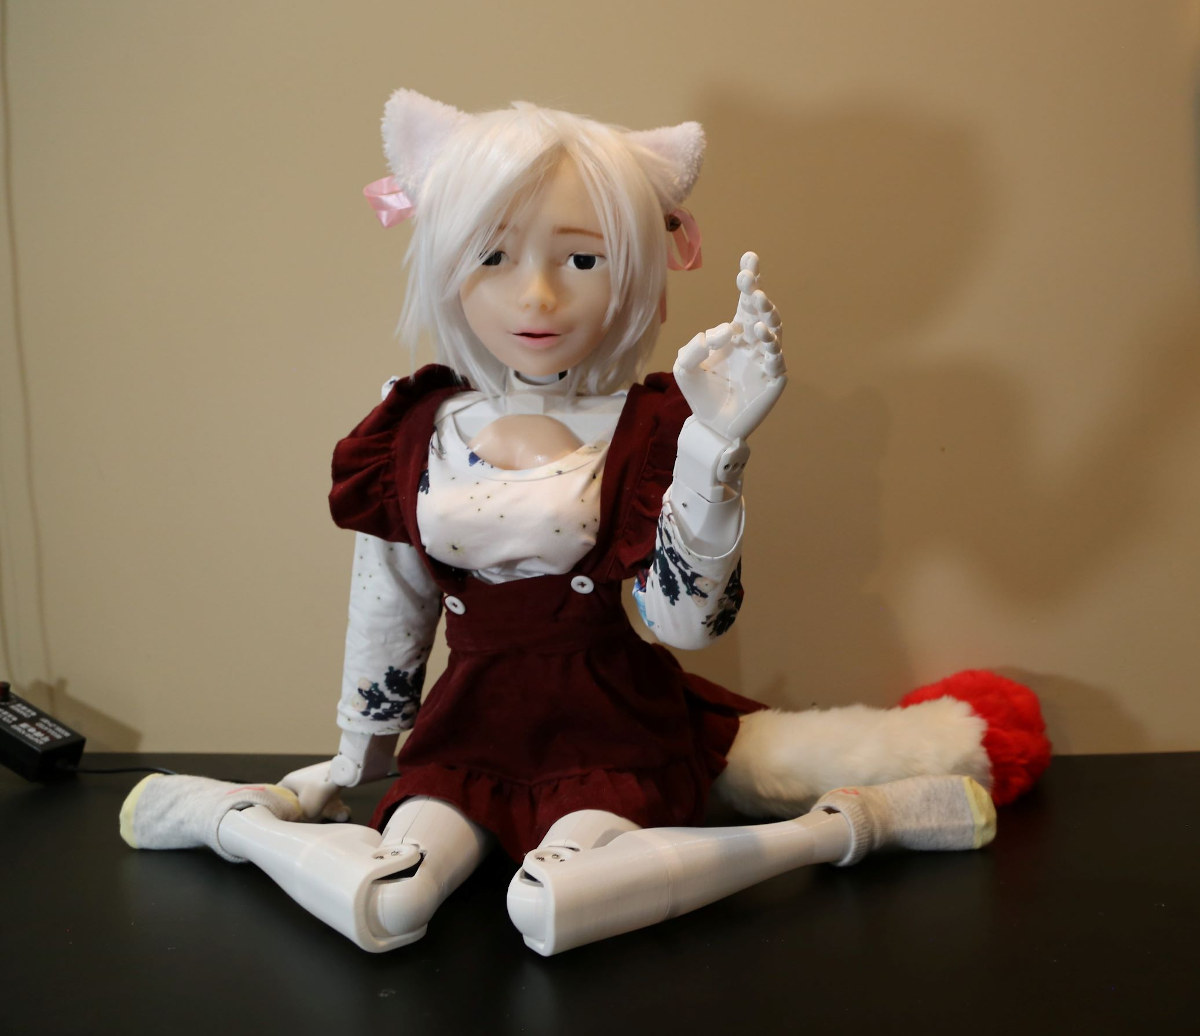 Robotic Cat Girl